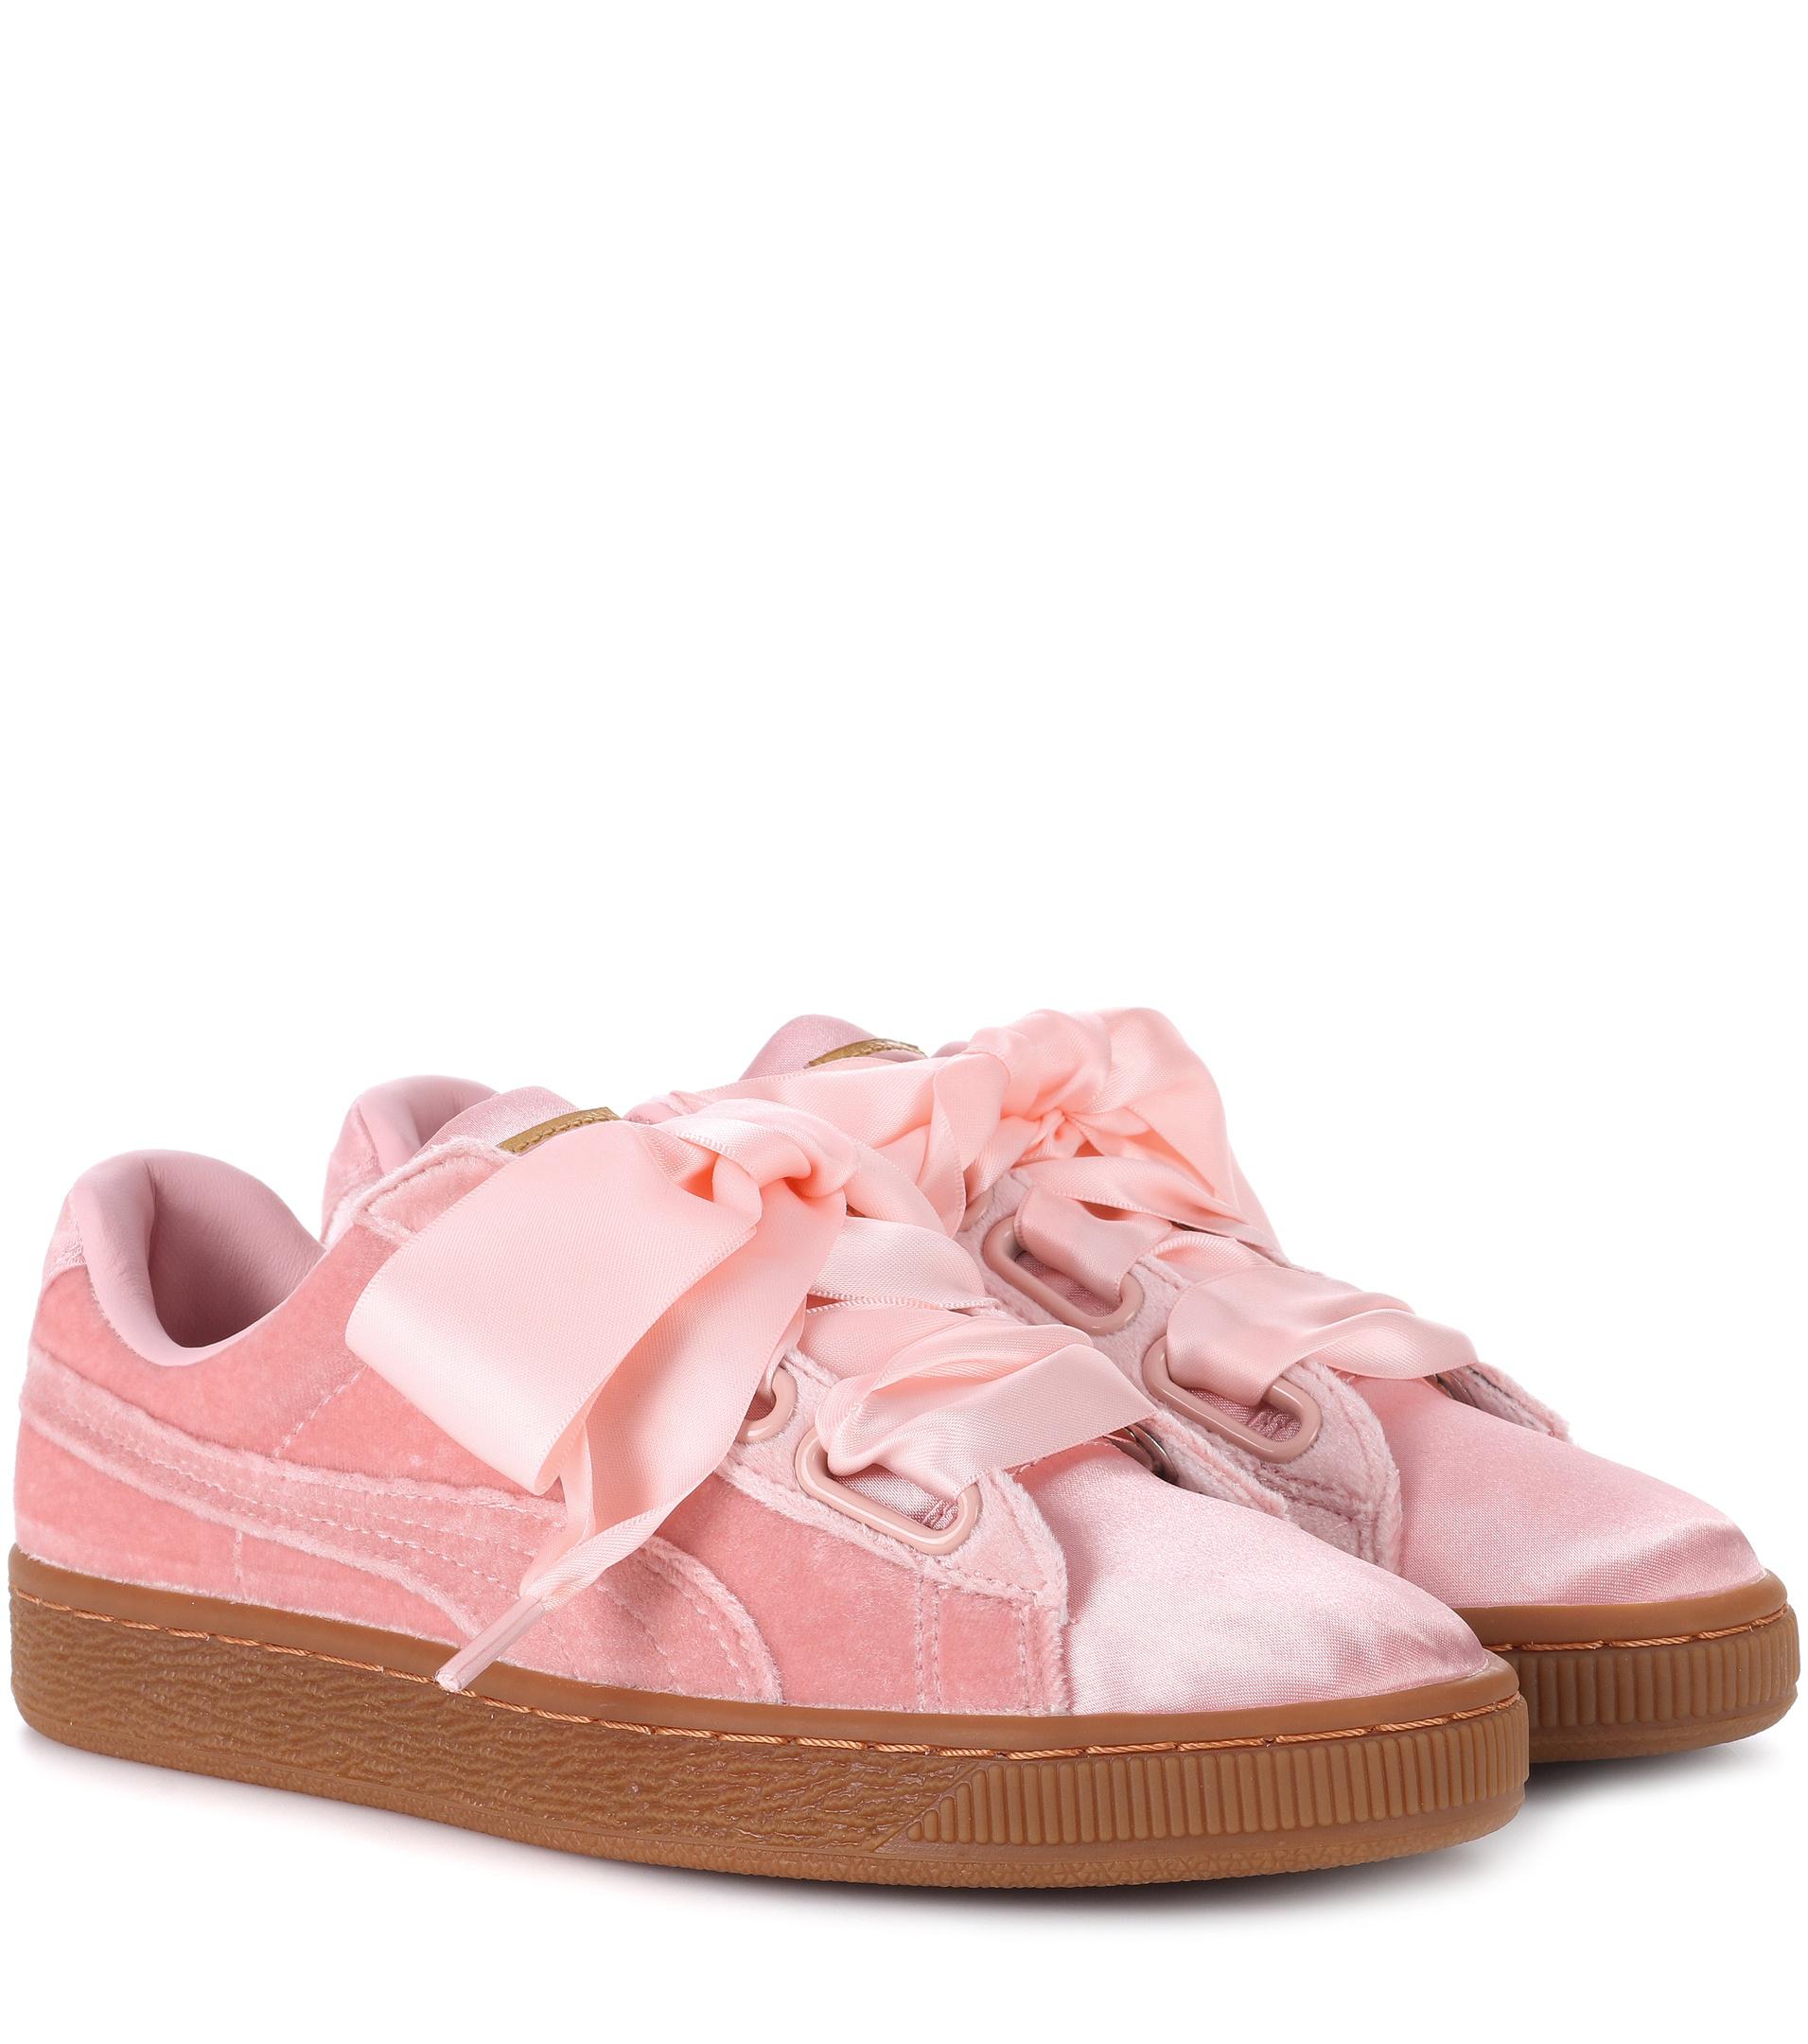 PUMA Basket Heart Sneakers In Pink Velvet | Lyst